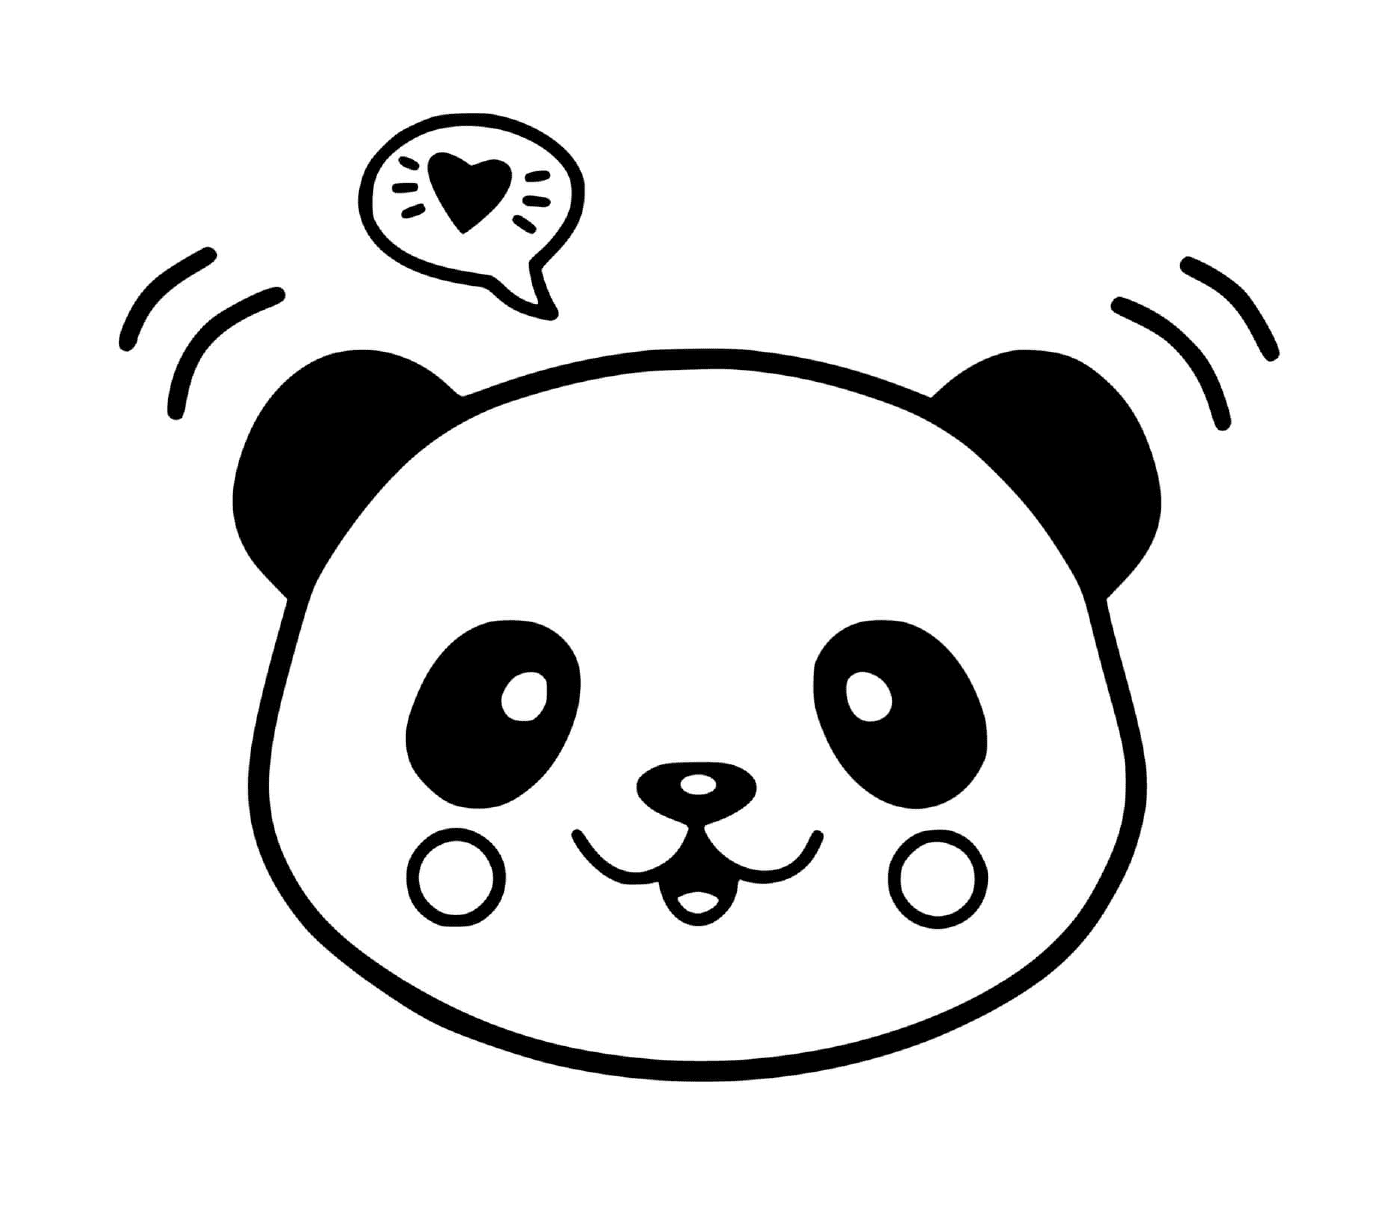  Um panda 